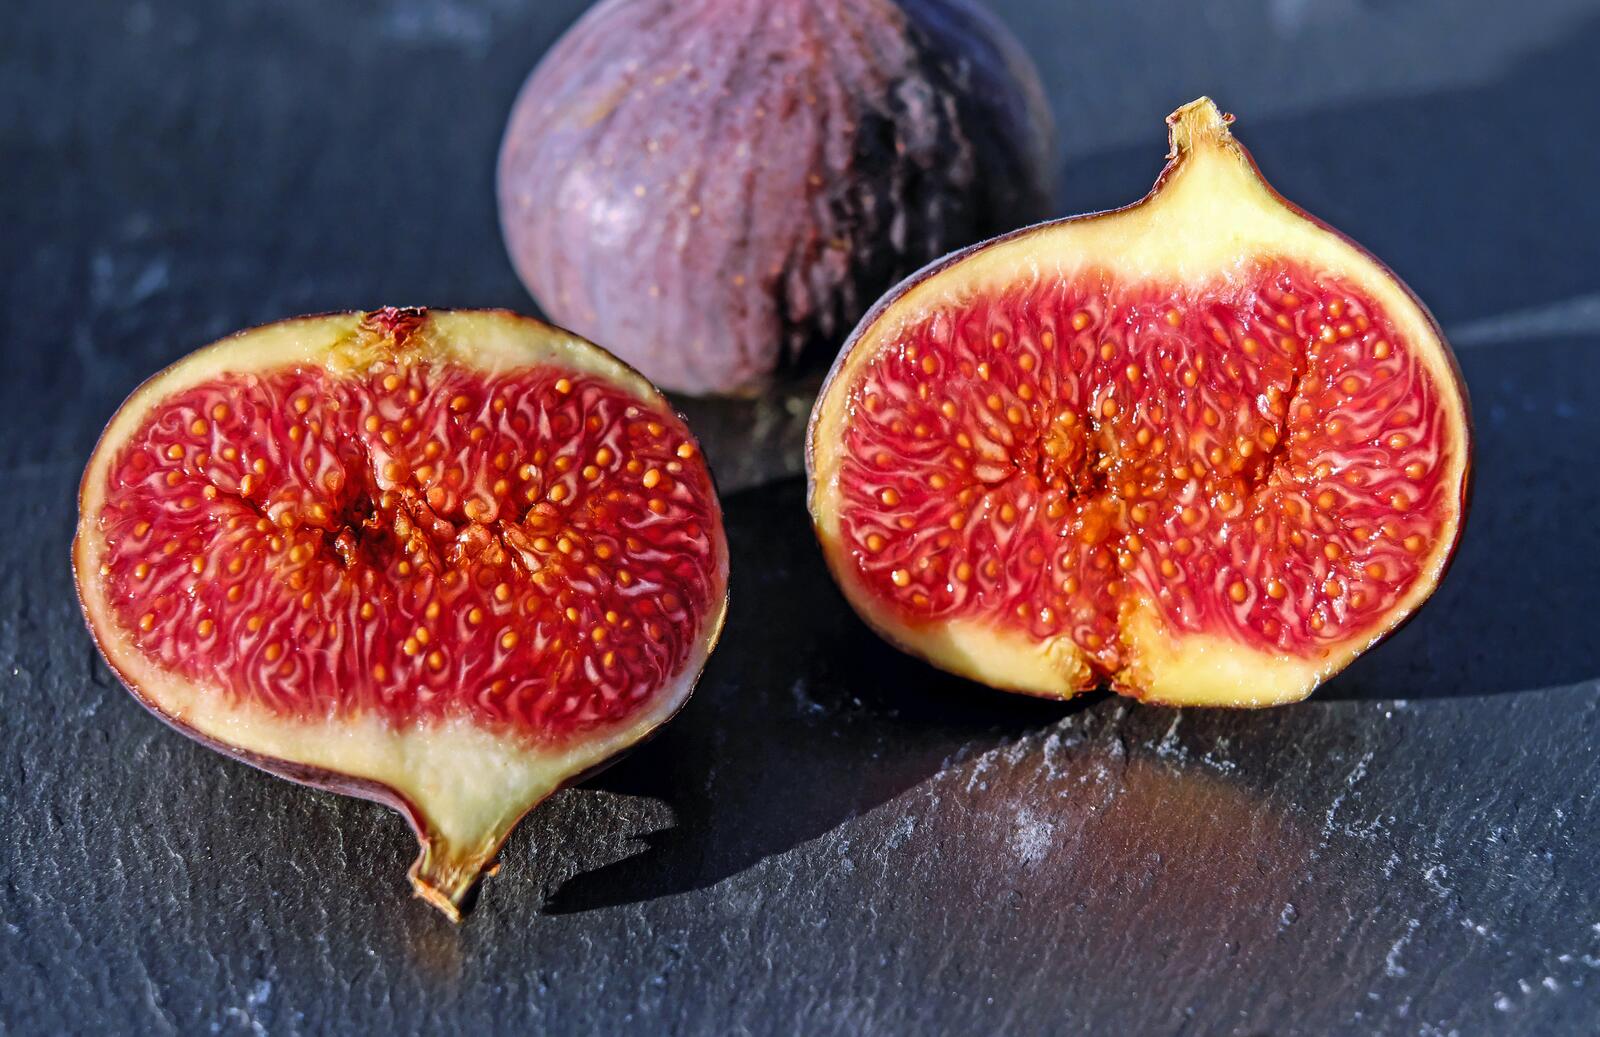 Wallpapers figs inside fruits on the desktop